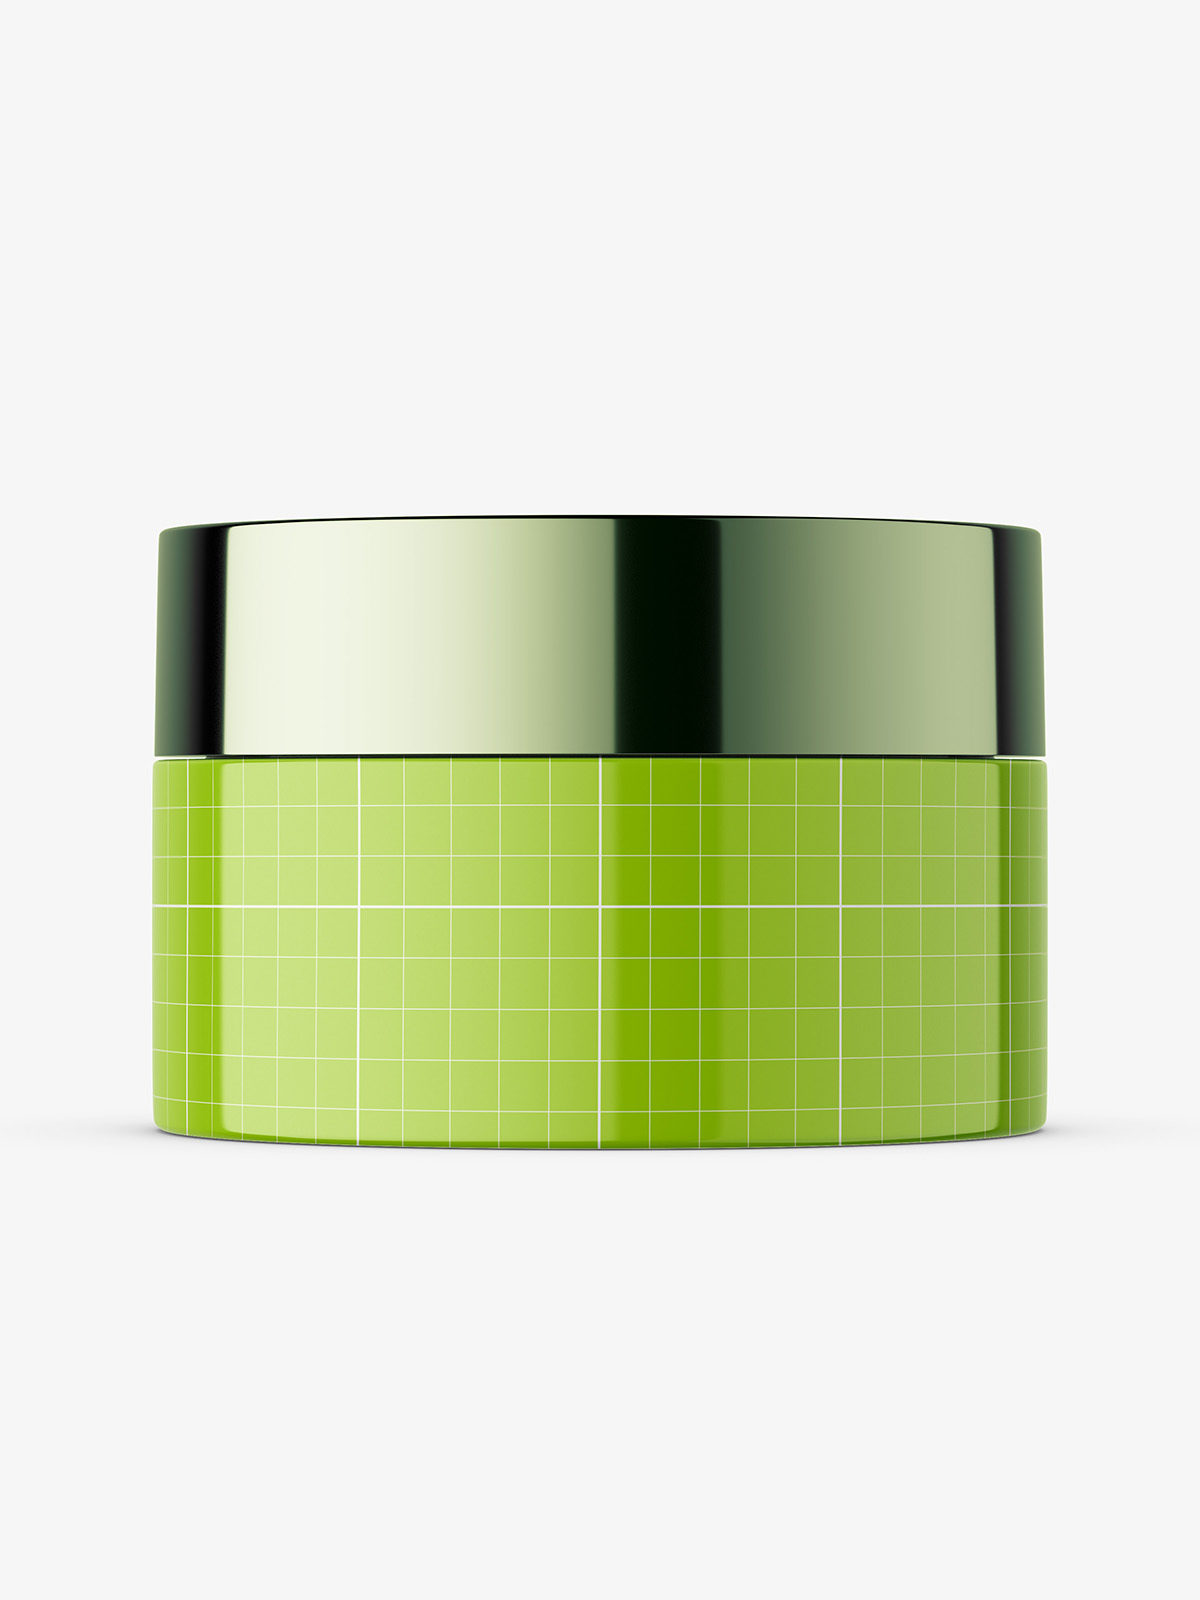 Download Glossy Cosmetic Jar With Metallic Cap Mockup Smarty Mockups Yellowimages Mockups